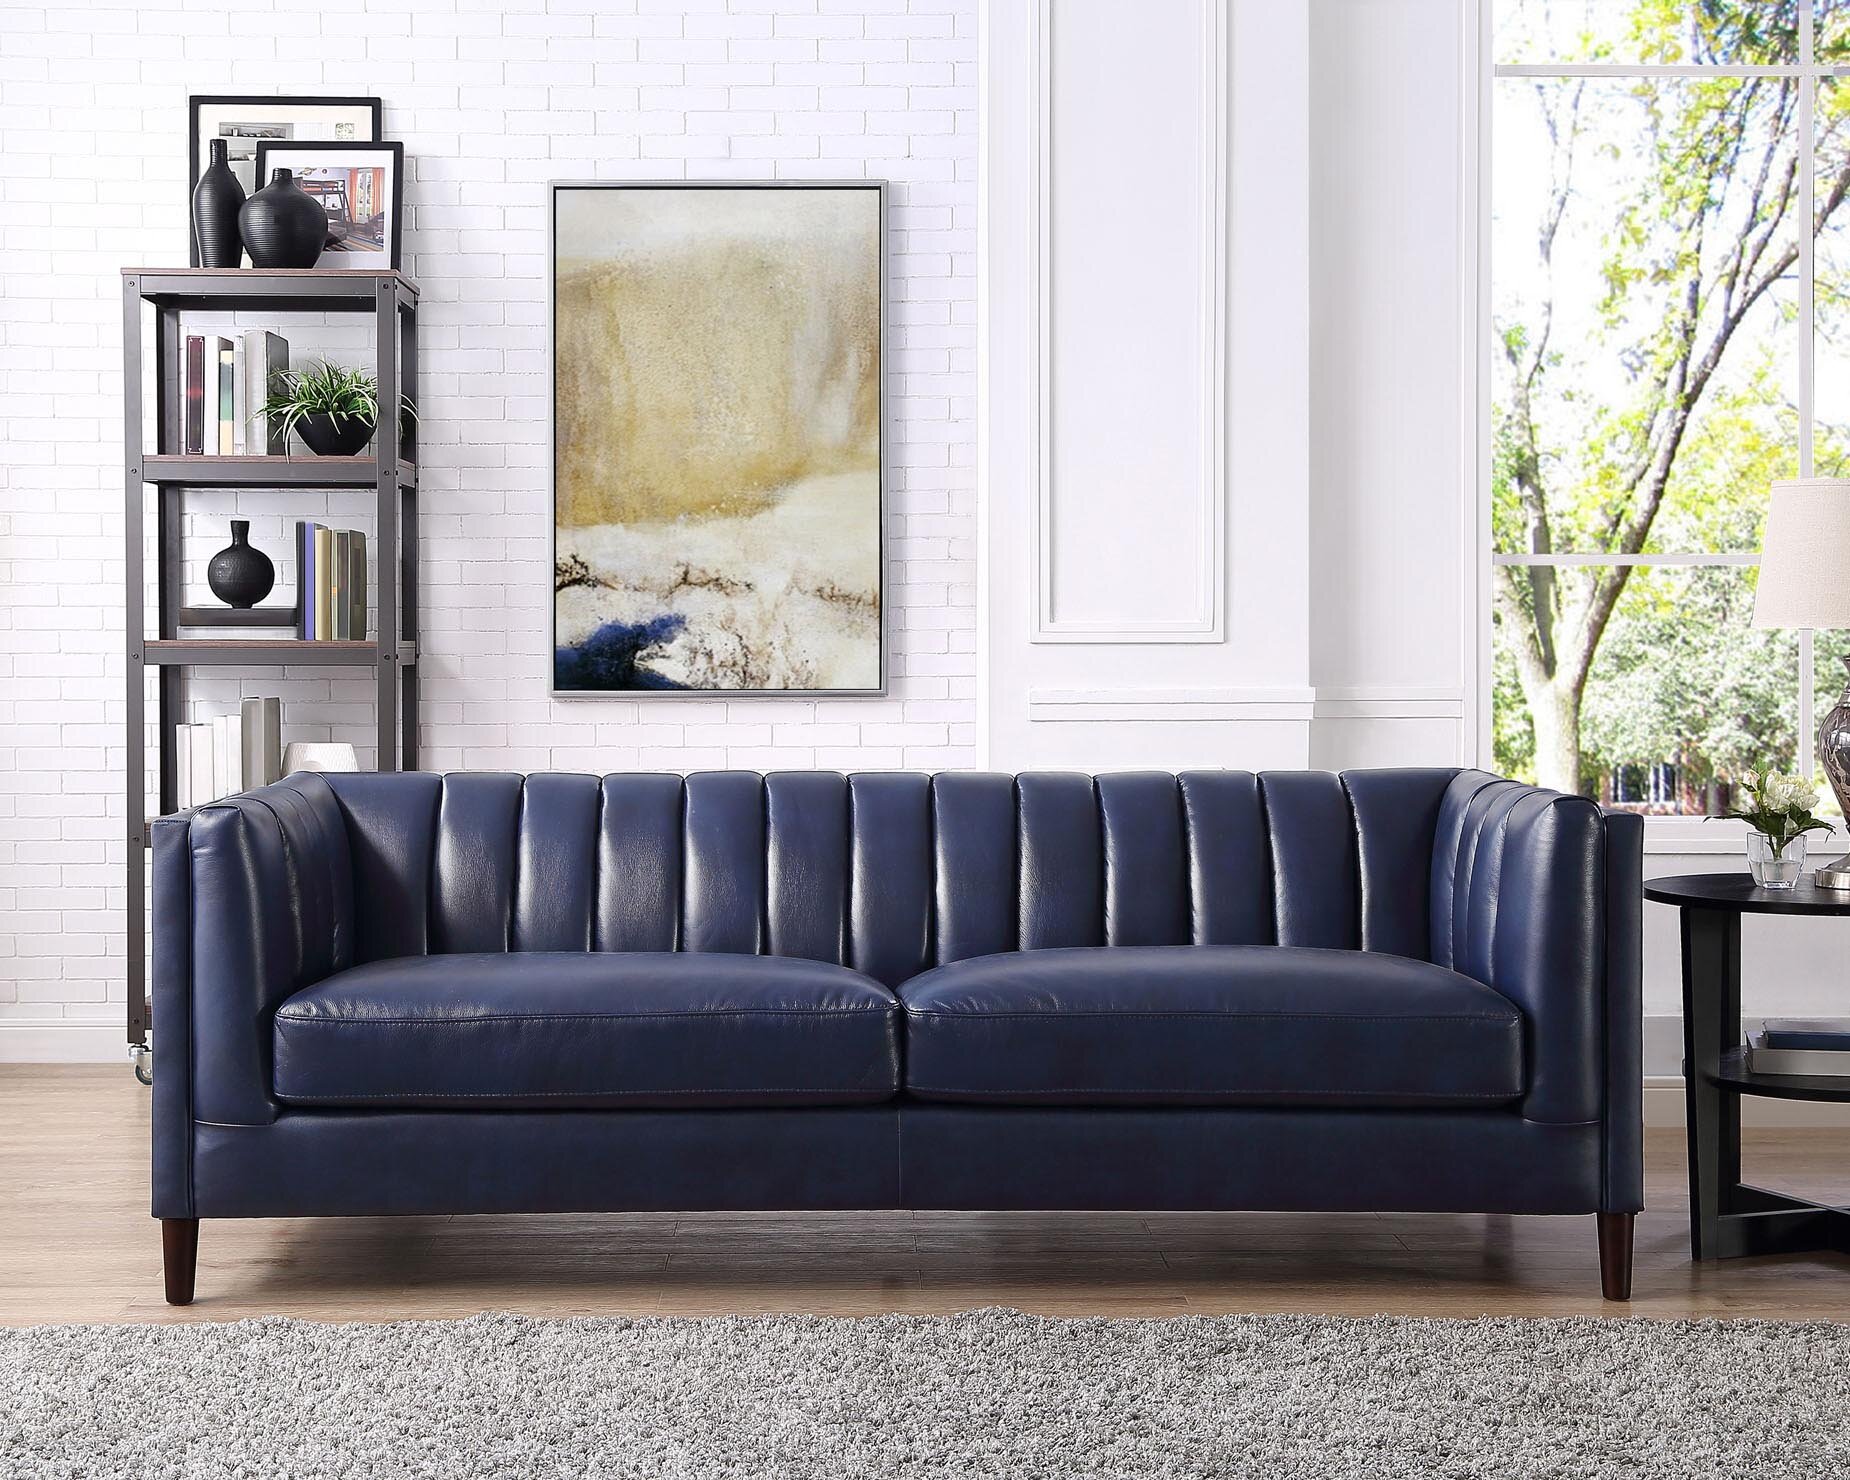 corrigan studio lup vintage leather sofa